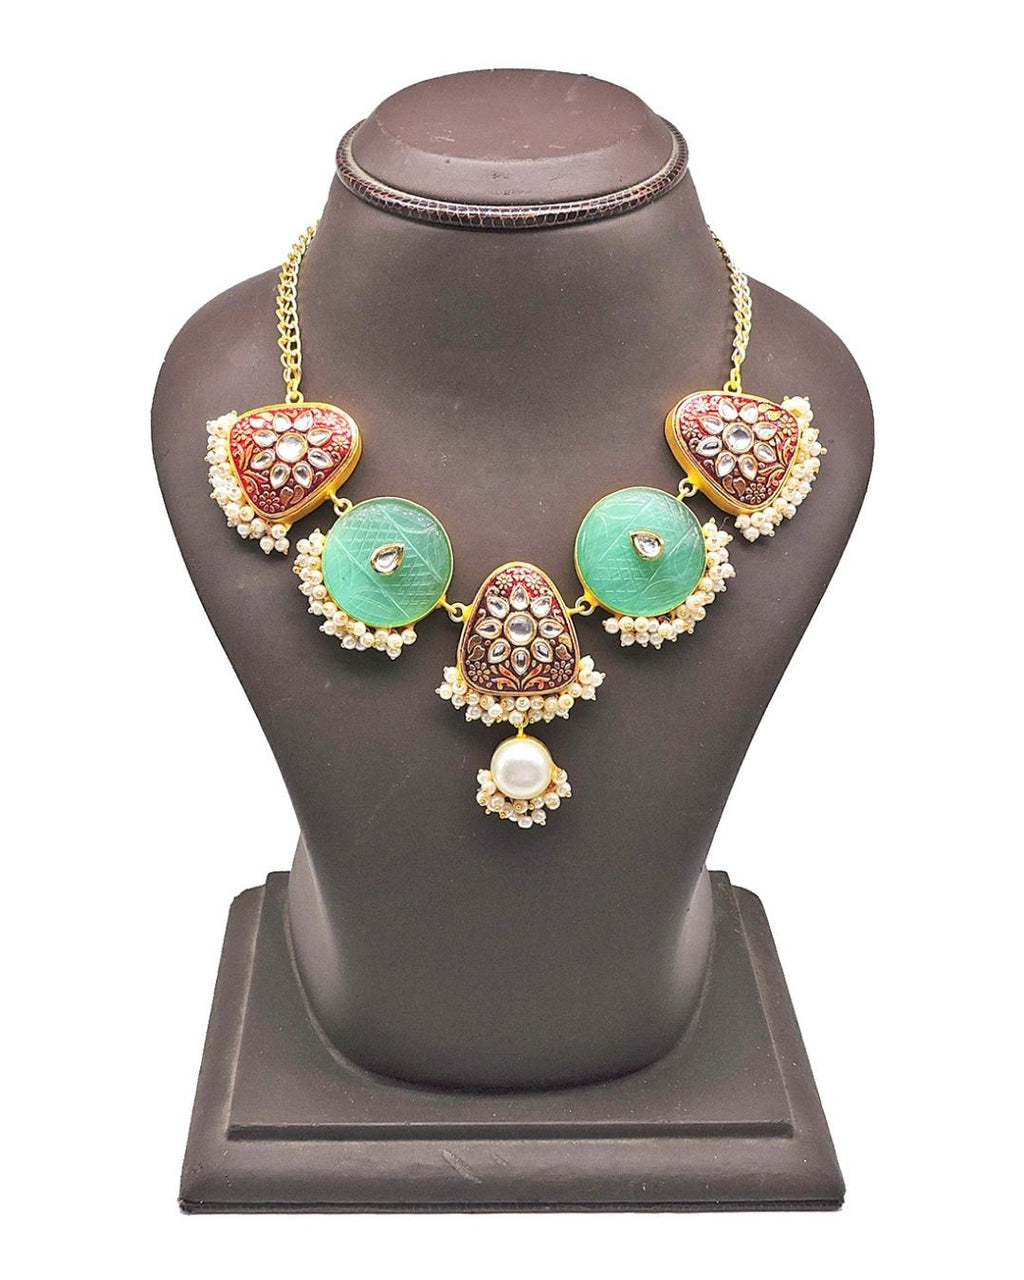 Zelda Necklace - Necklaces - Handcrafted Jewellery - Made in India - Dubai Jewellery, Fashion & Lifestyle - Dori